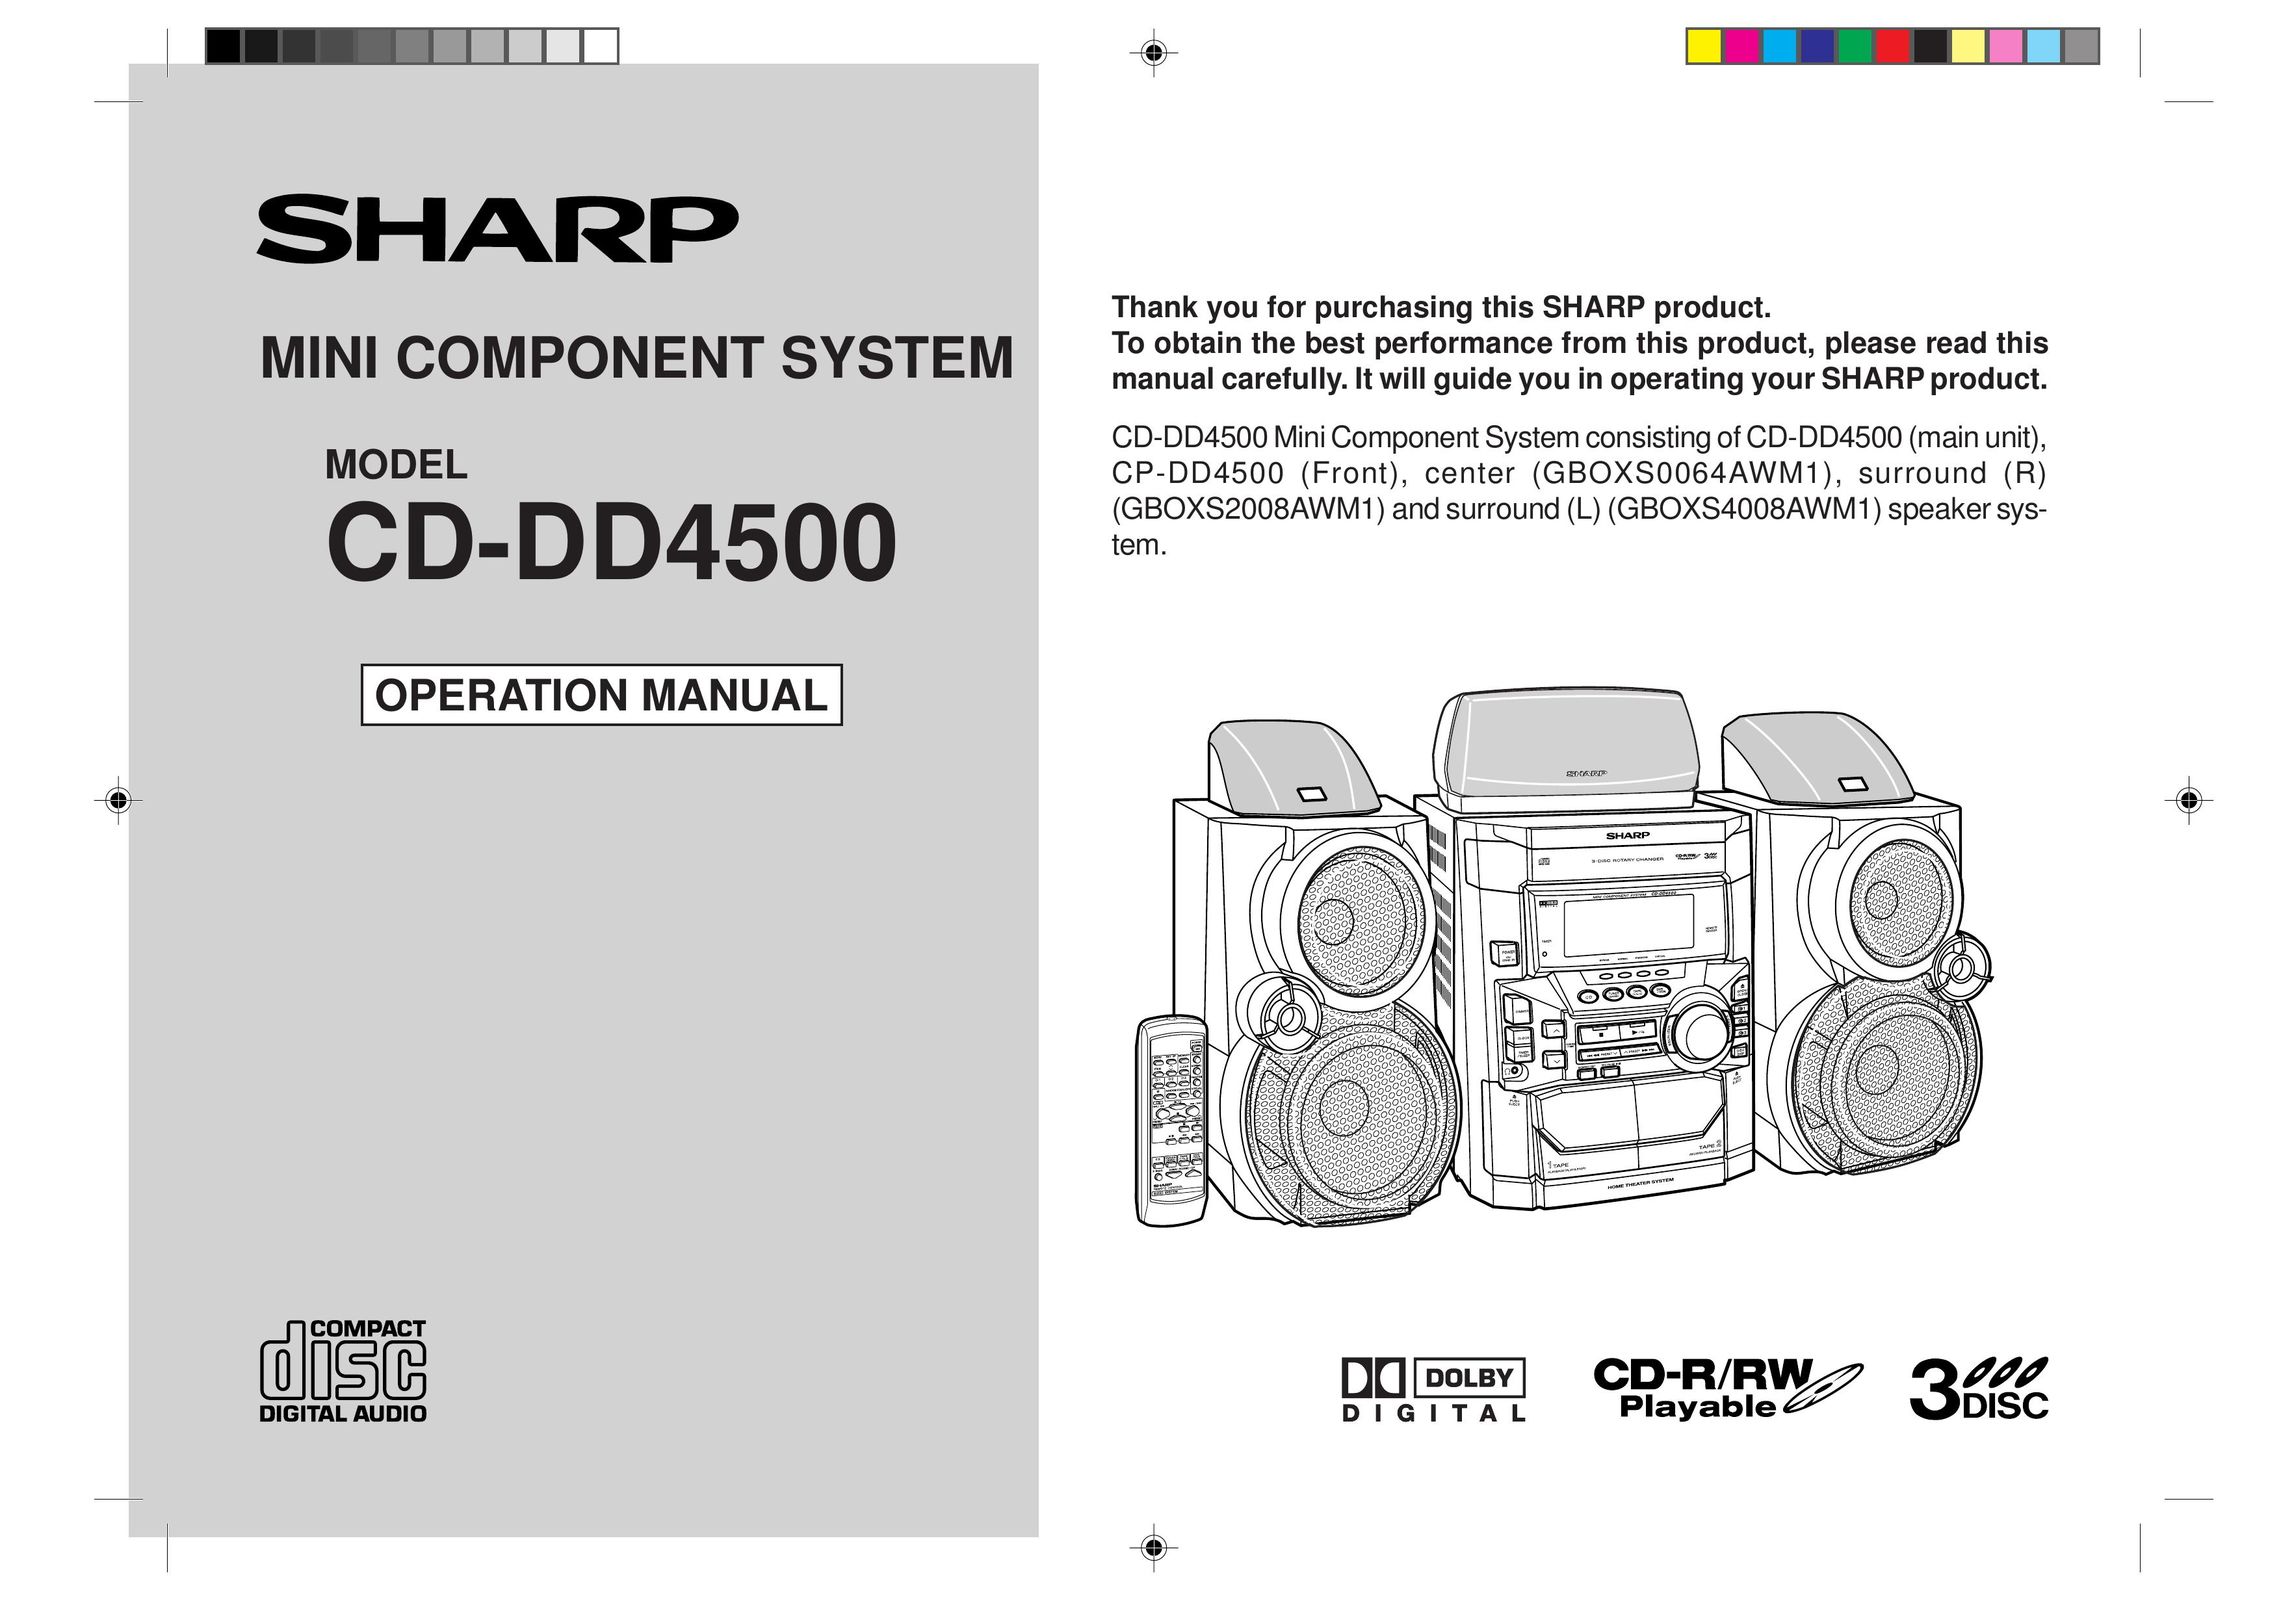 Sharp CD-DD4500 CD Player User Manual